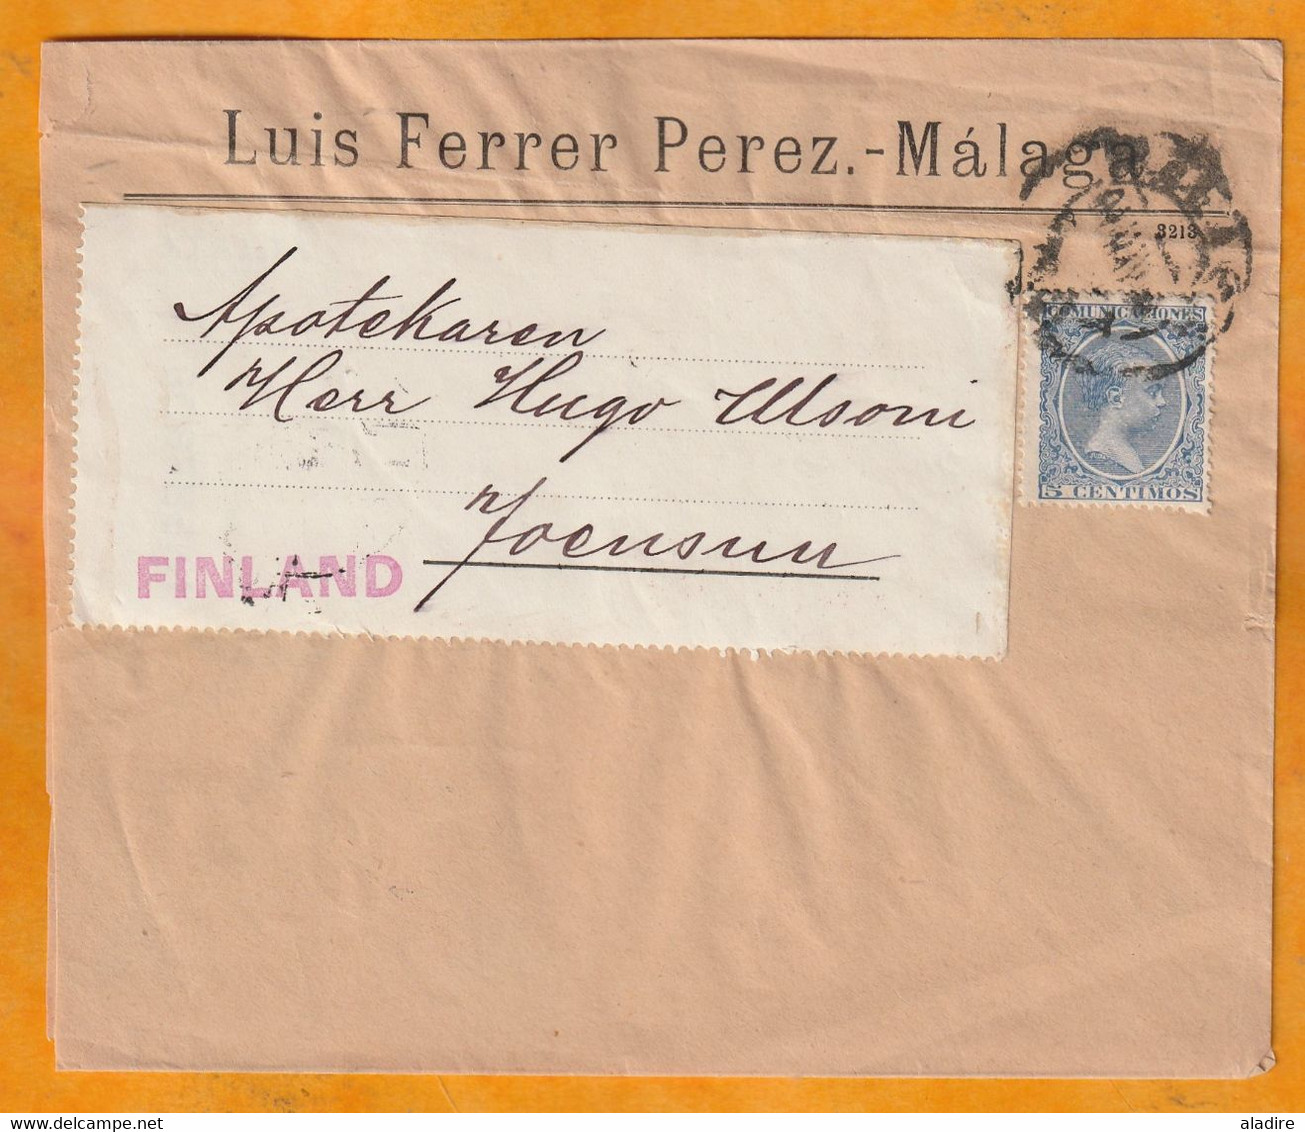 1896 - 5 Centimos Bleu Sur Enveloppe De MALAGA Espagne Vers Joensuu, Finlande Suomi Finland - Covers & Documents